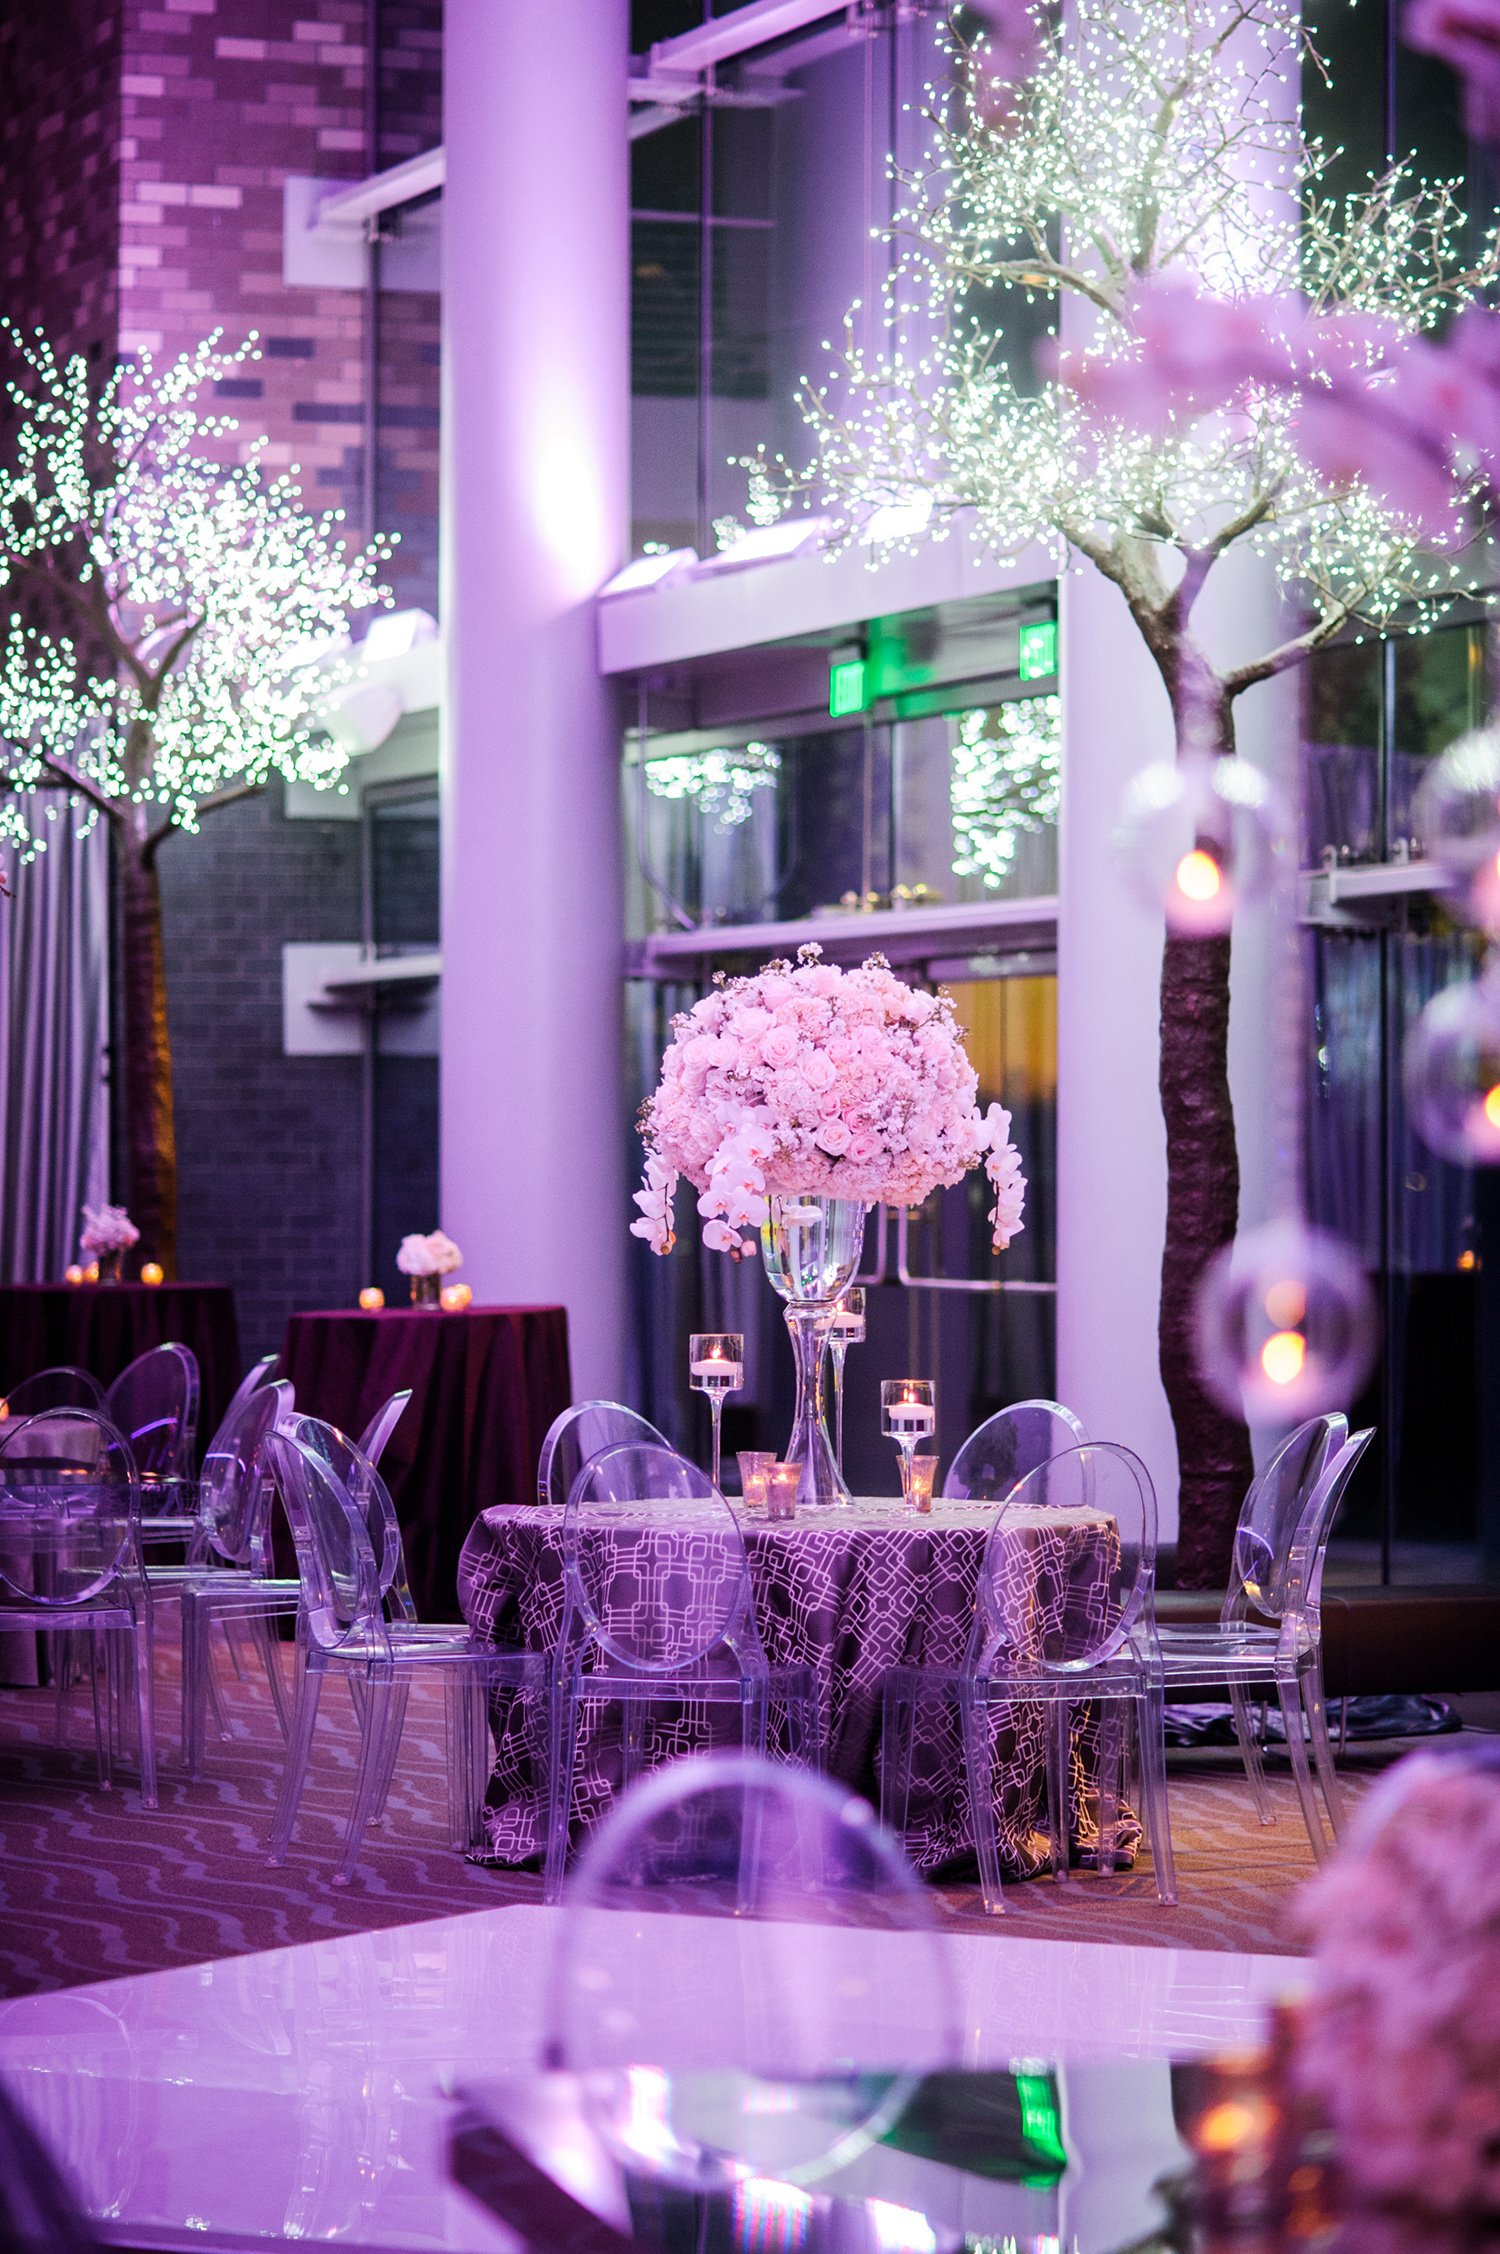 purple lighting - concert style party wedding